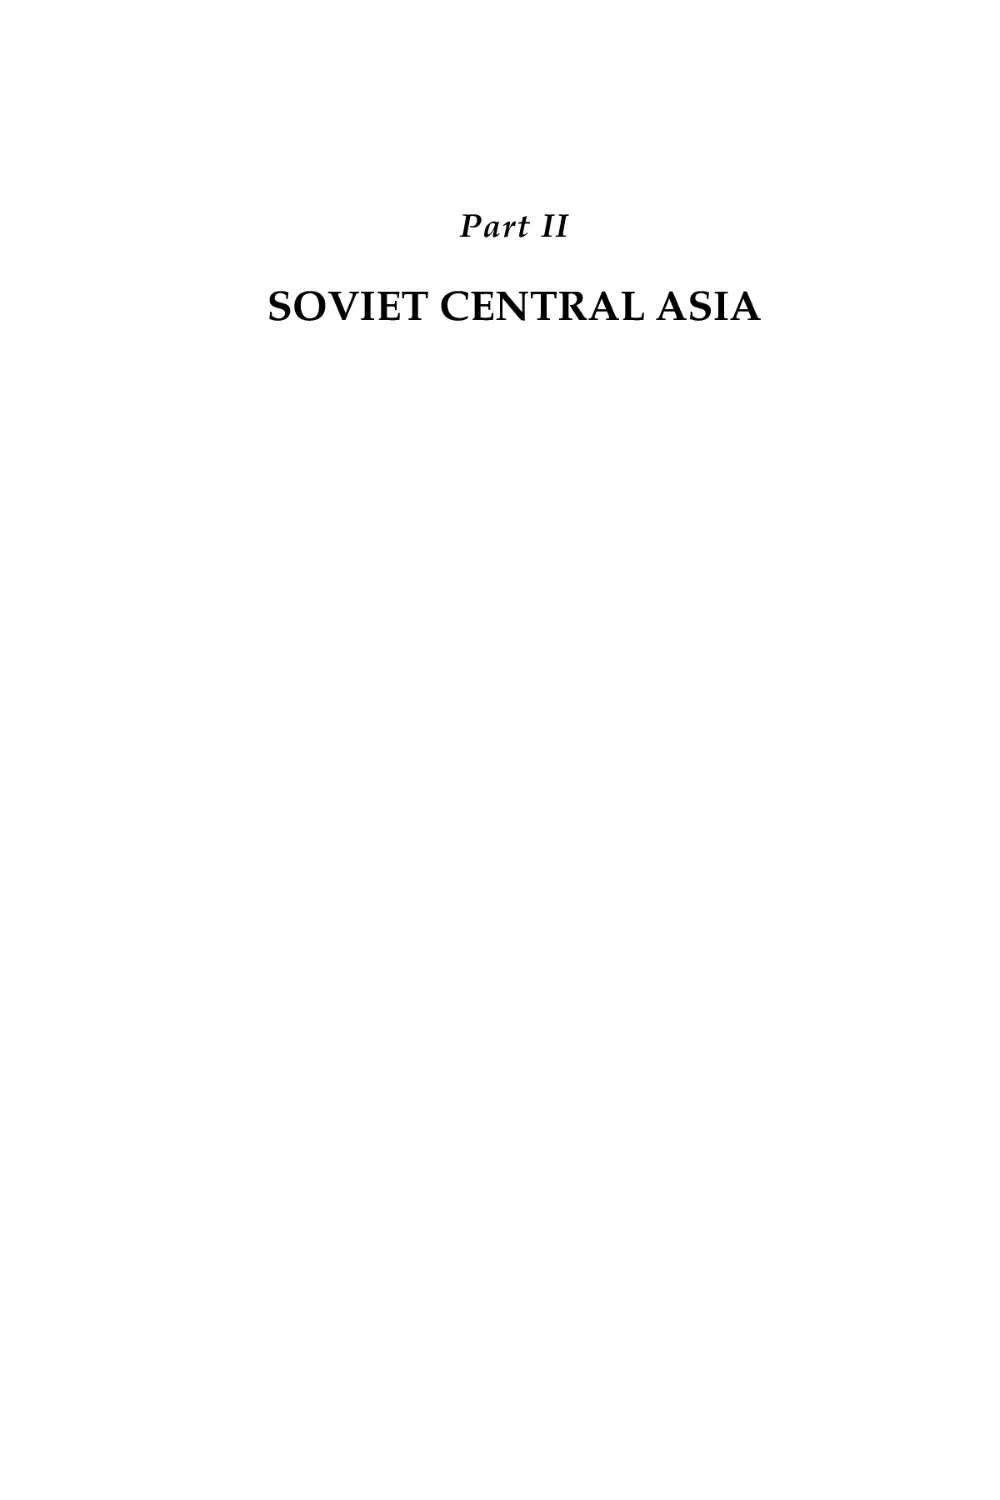 Part II. Soviet Central Asia